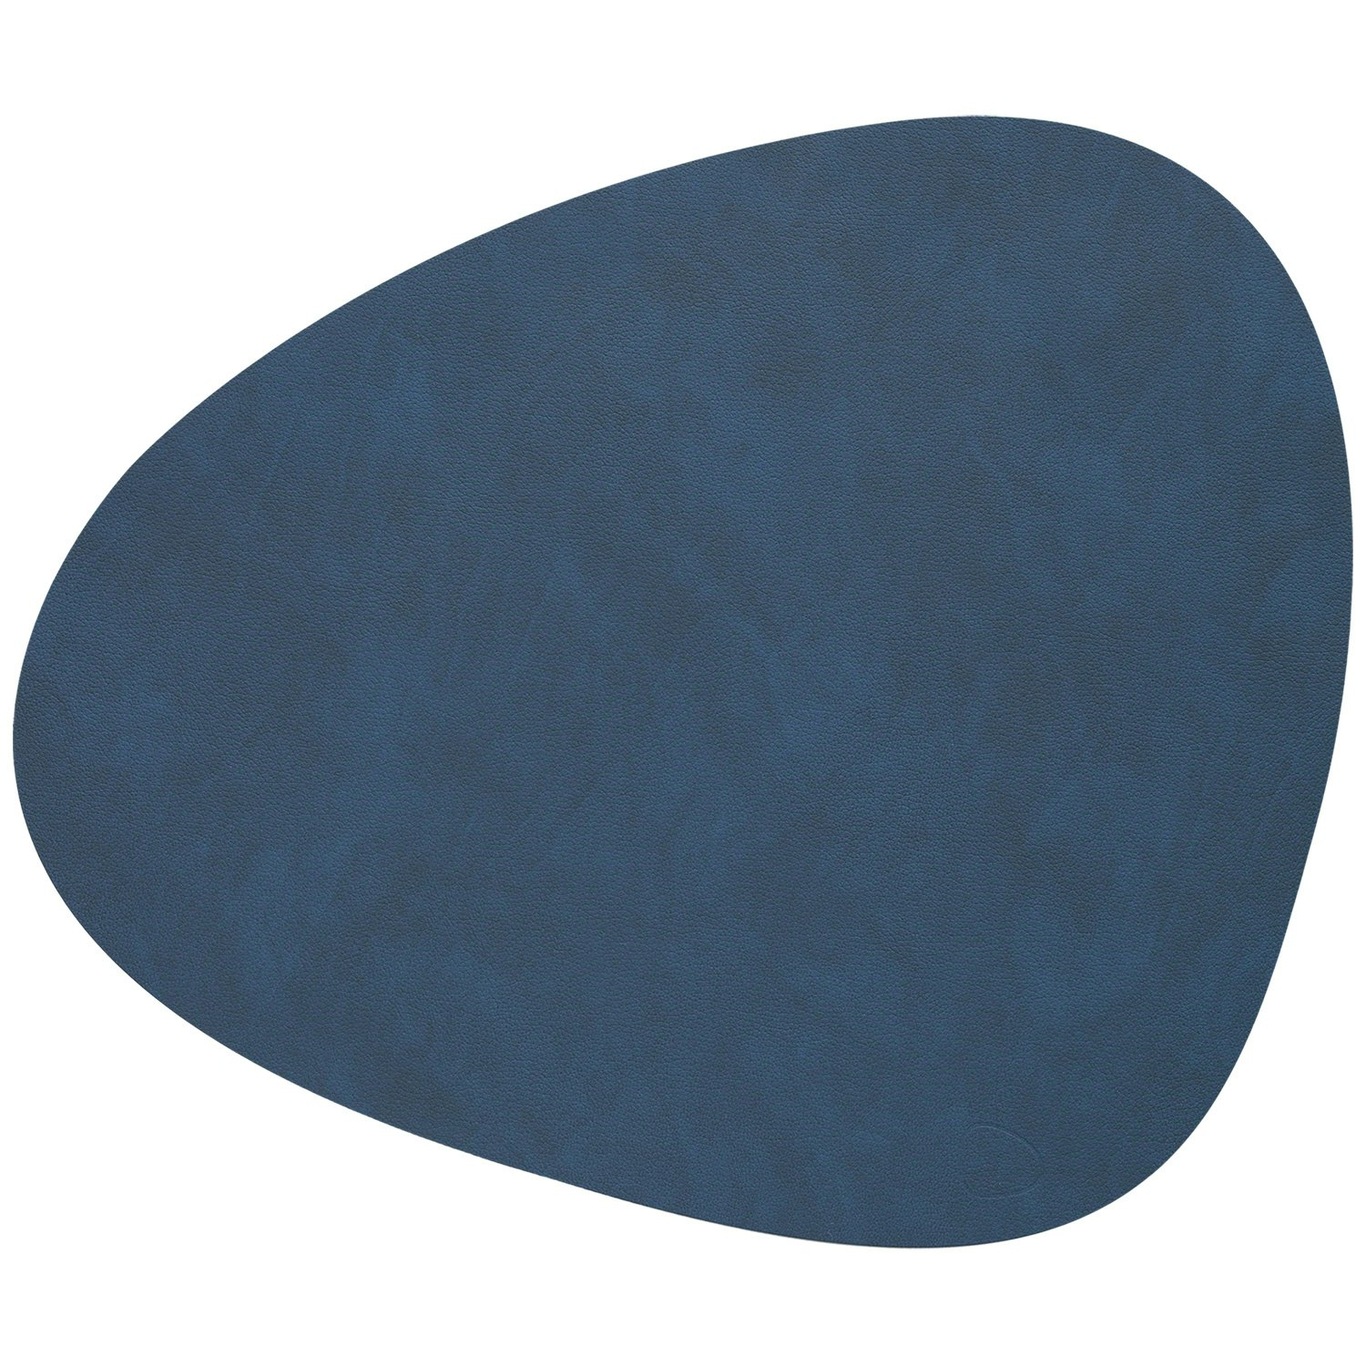 Curve Placemat Nupo 24x28 cm, Middernachtblauw